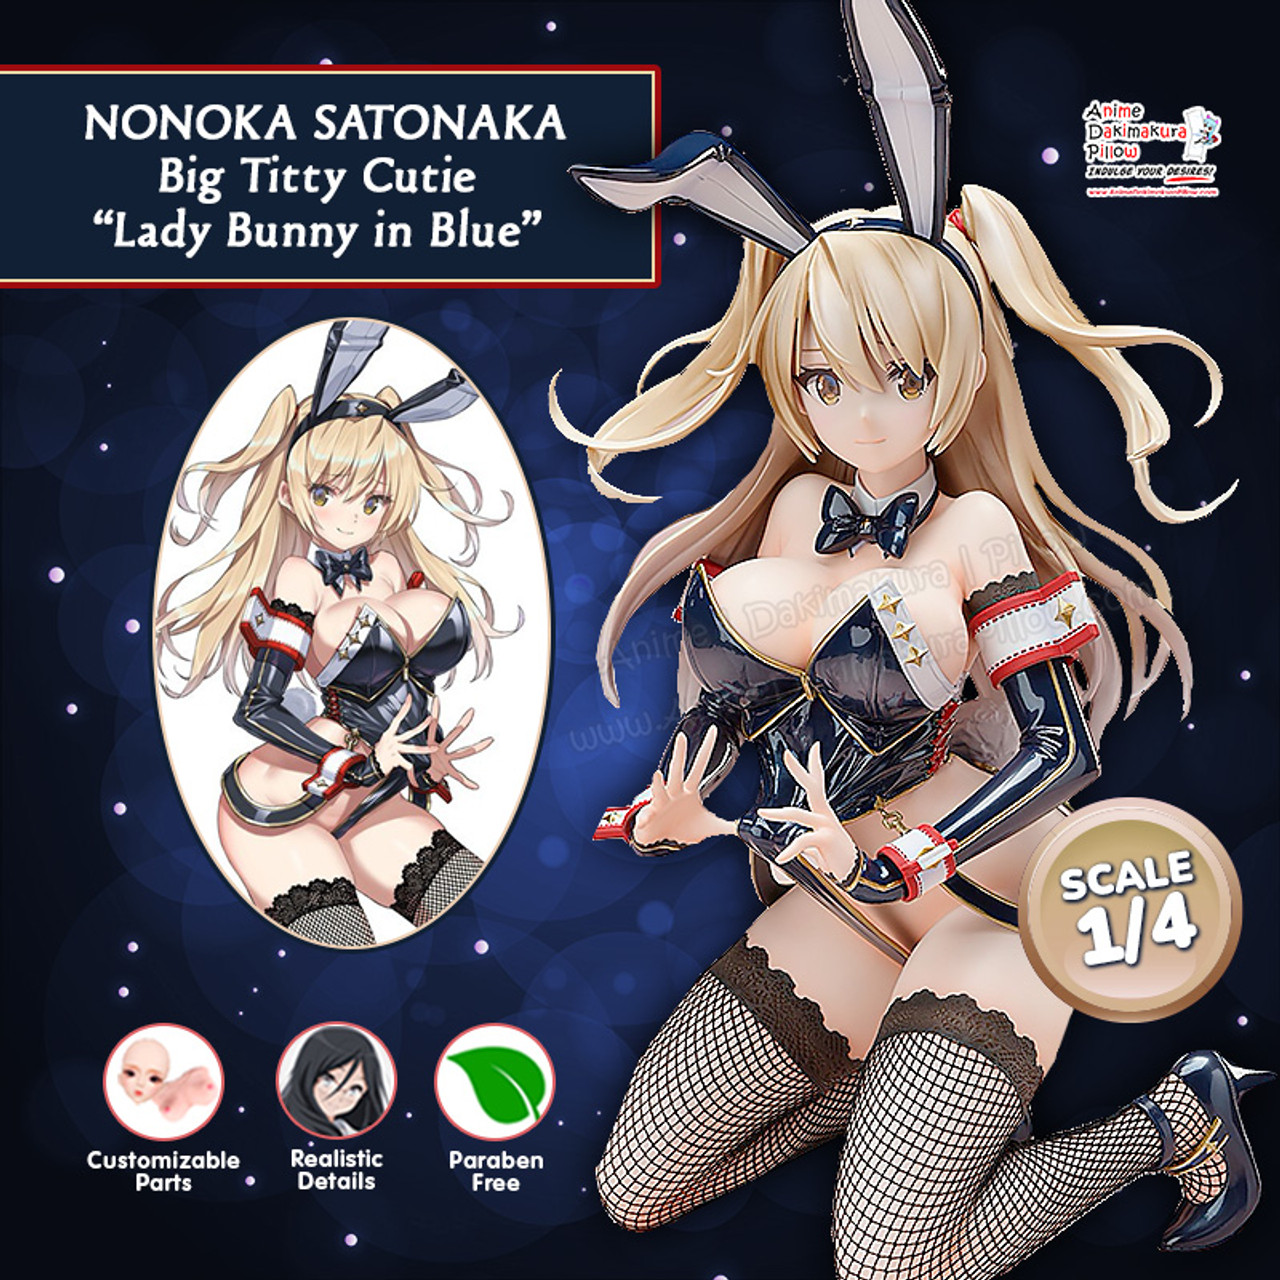 ADP NONOKA SATONAKA Big Titty Cutie “Lady Bunny Performer” 18+ Anime Figurine OH-FG-027 picture picture